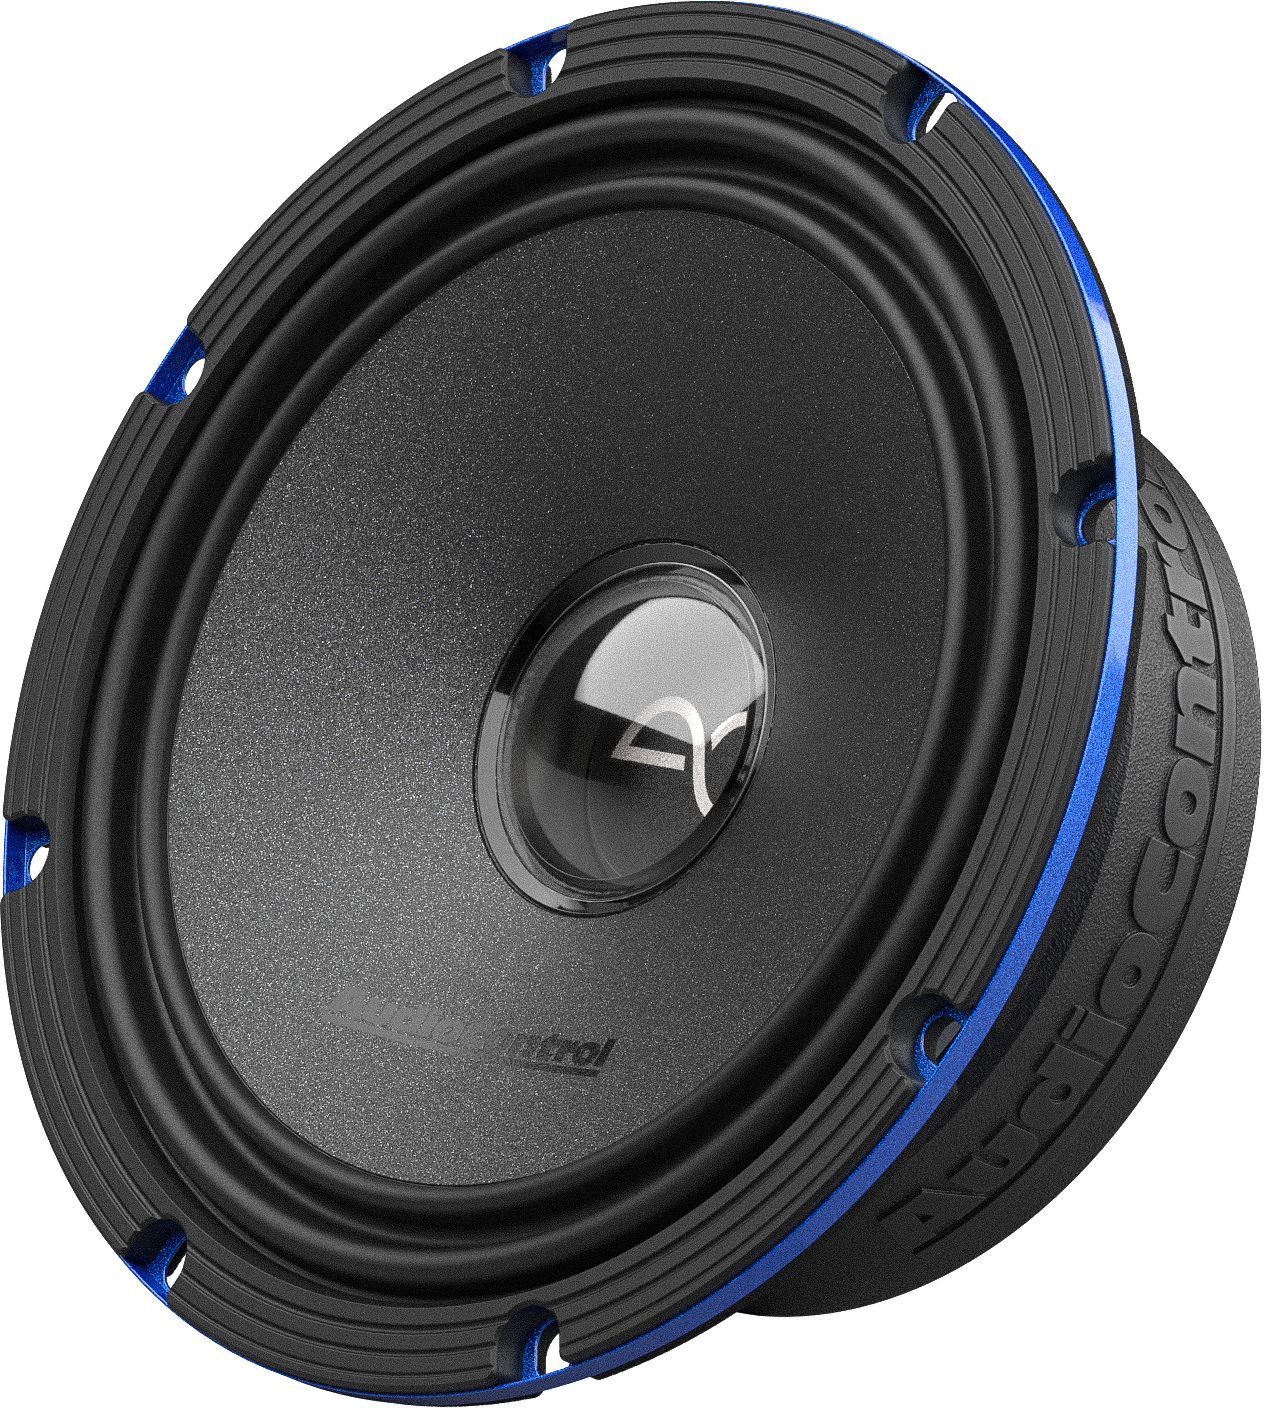 AudioControl PNW Series 6.5" 100 Watt (RMS) High-Fidelity Component Speakers (Pair)